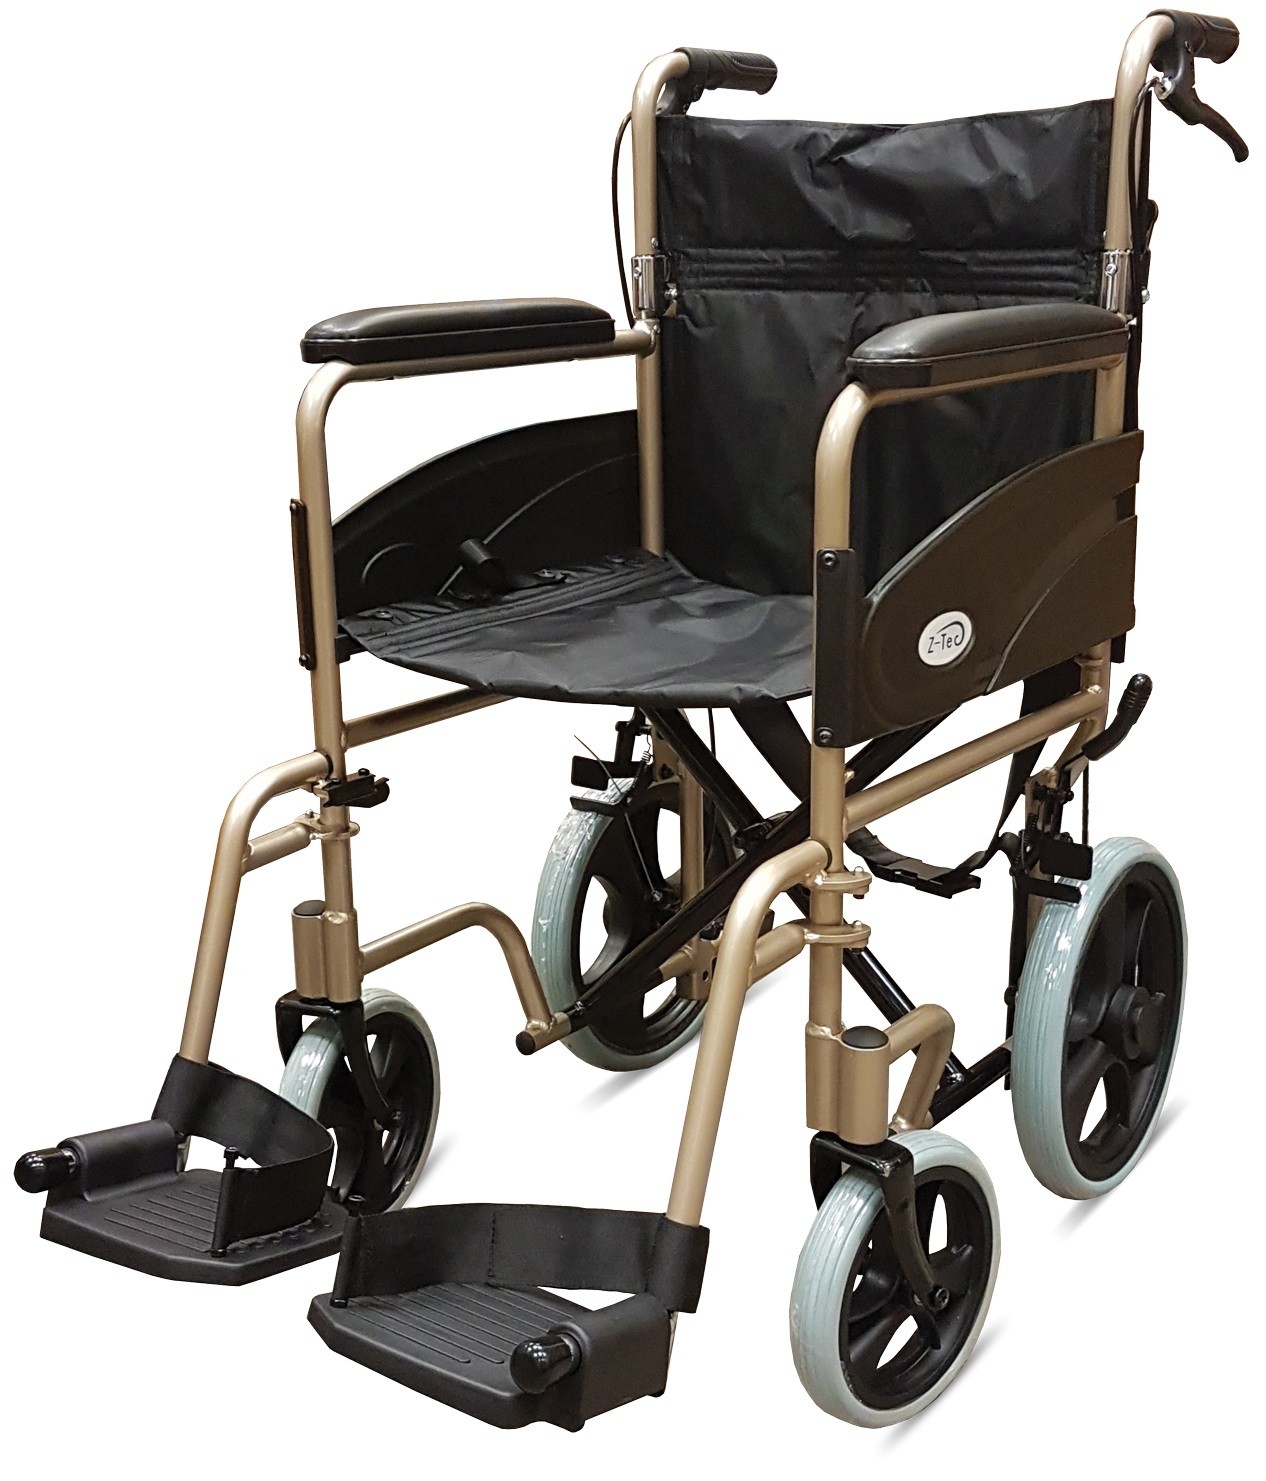 Z-tec 601x Lightweight Aluminium Transit Wheelchair 1